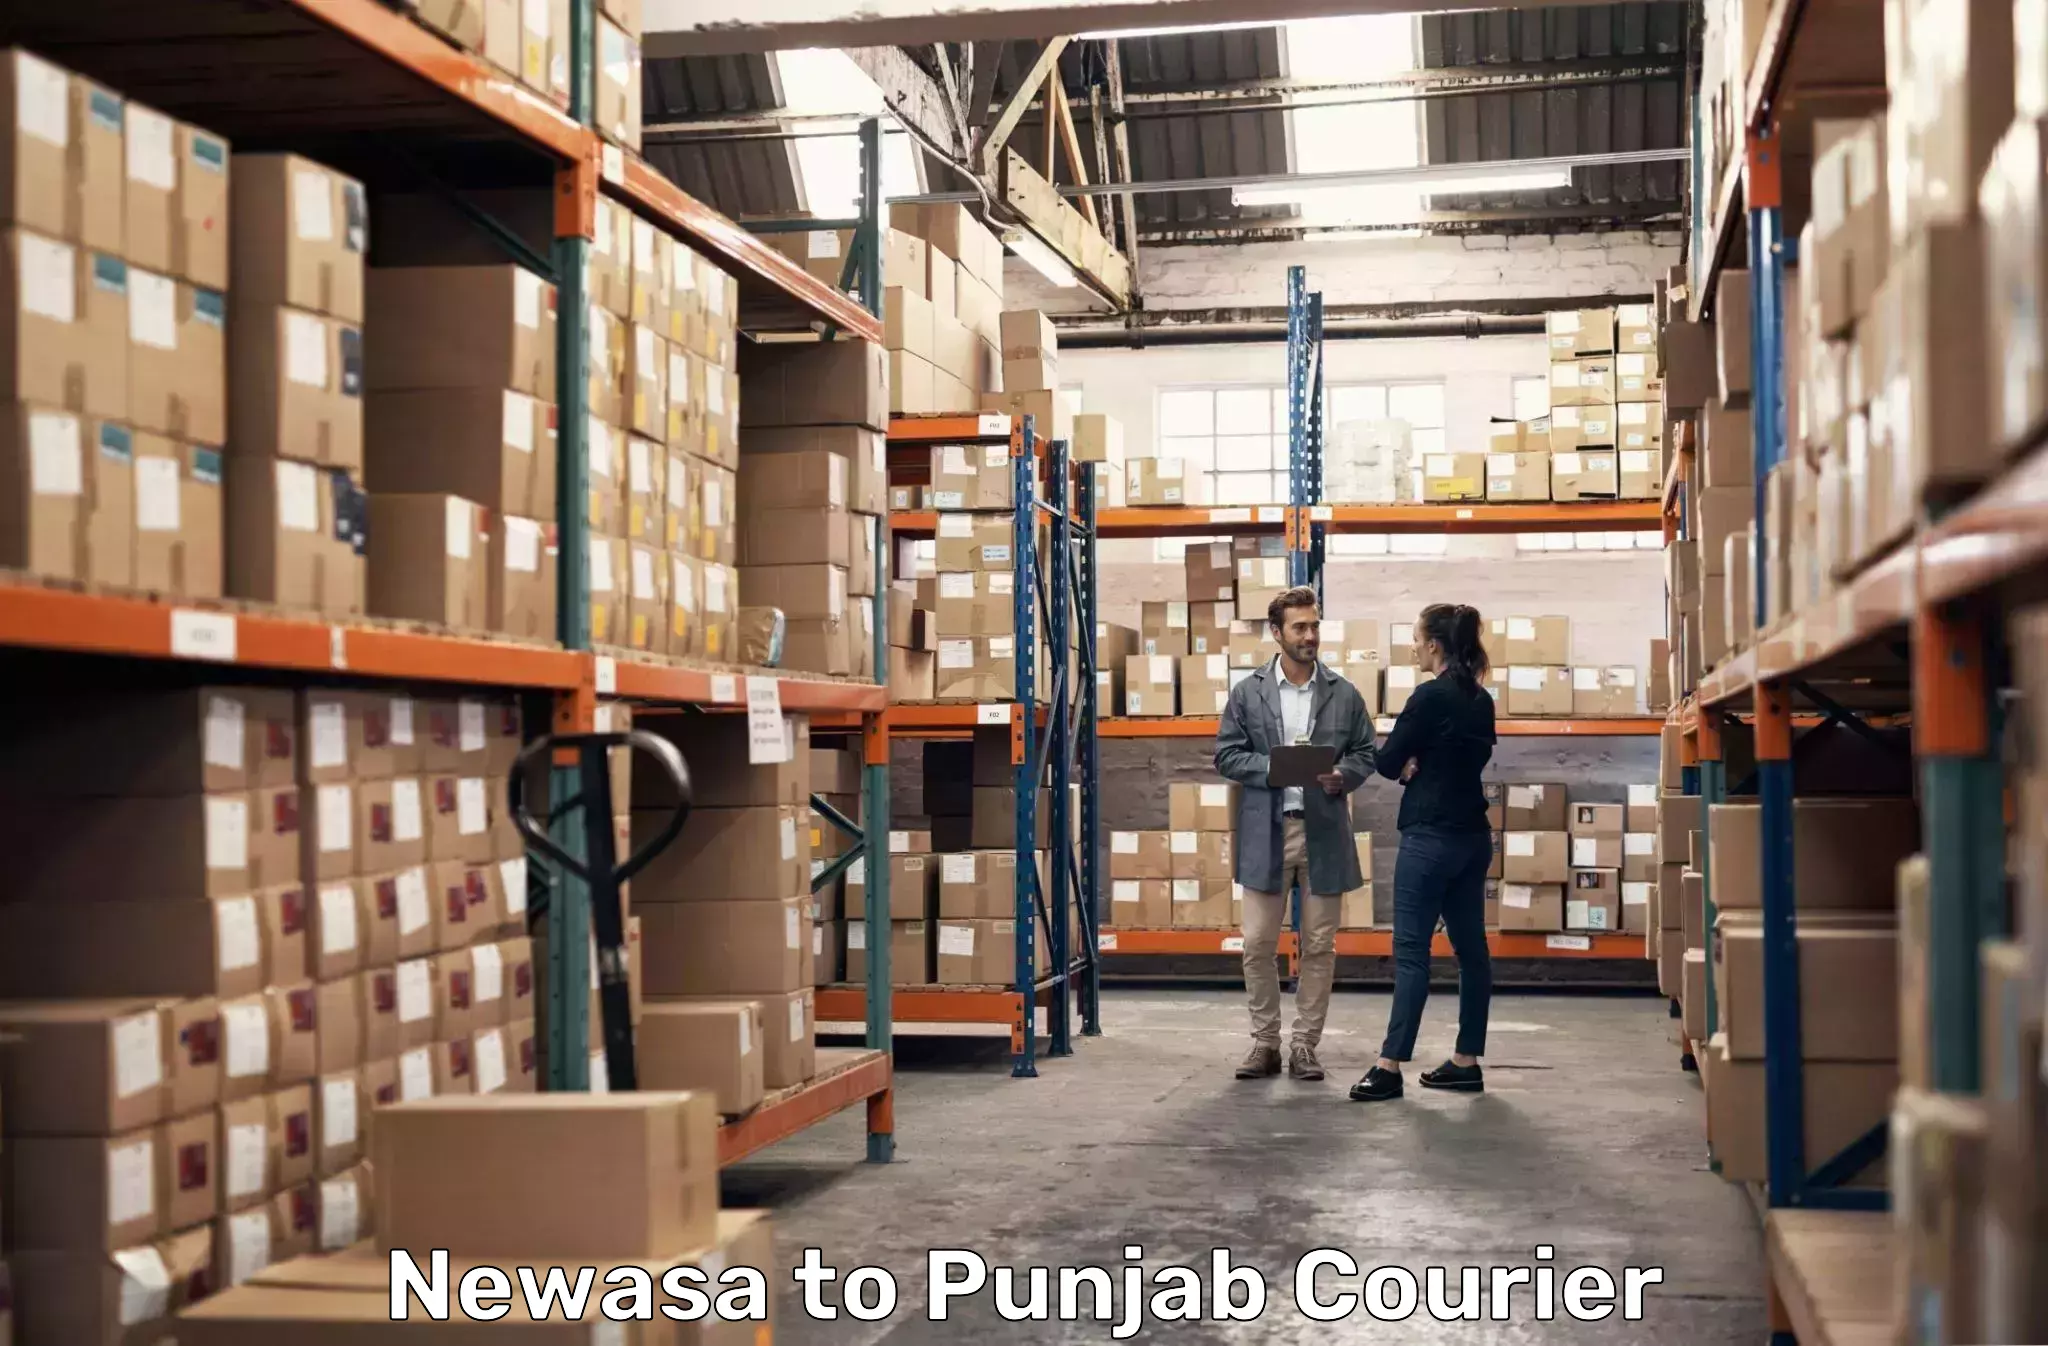 International courier networks Newasa to Punjab